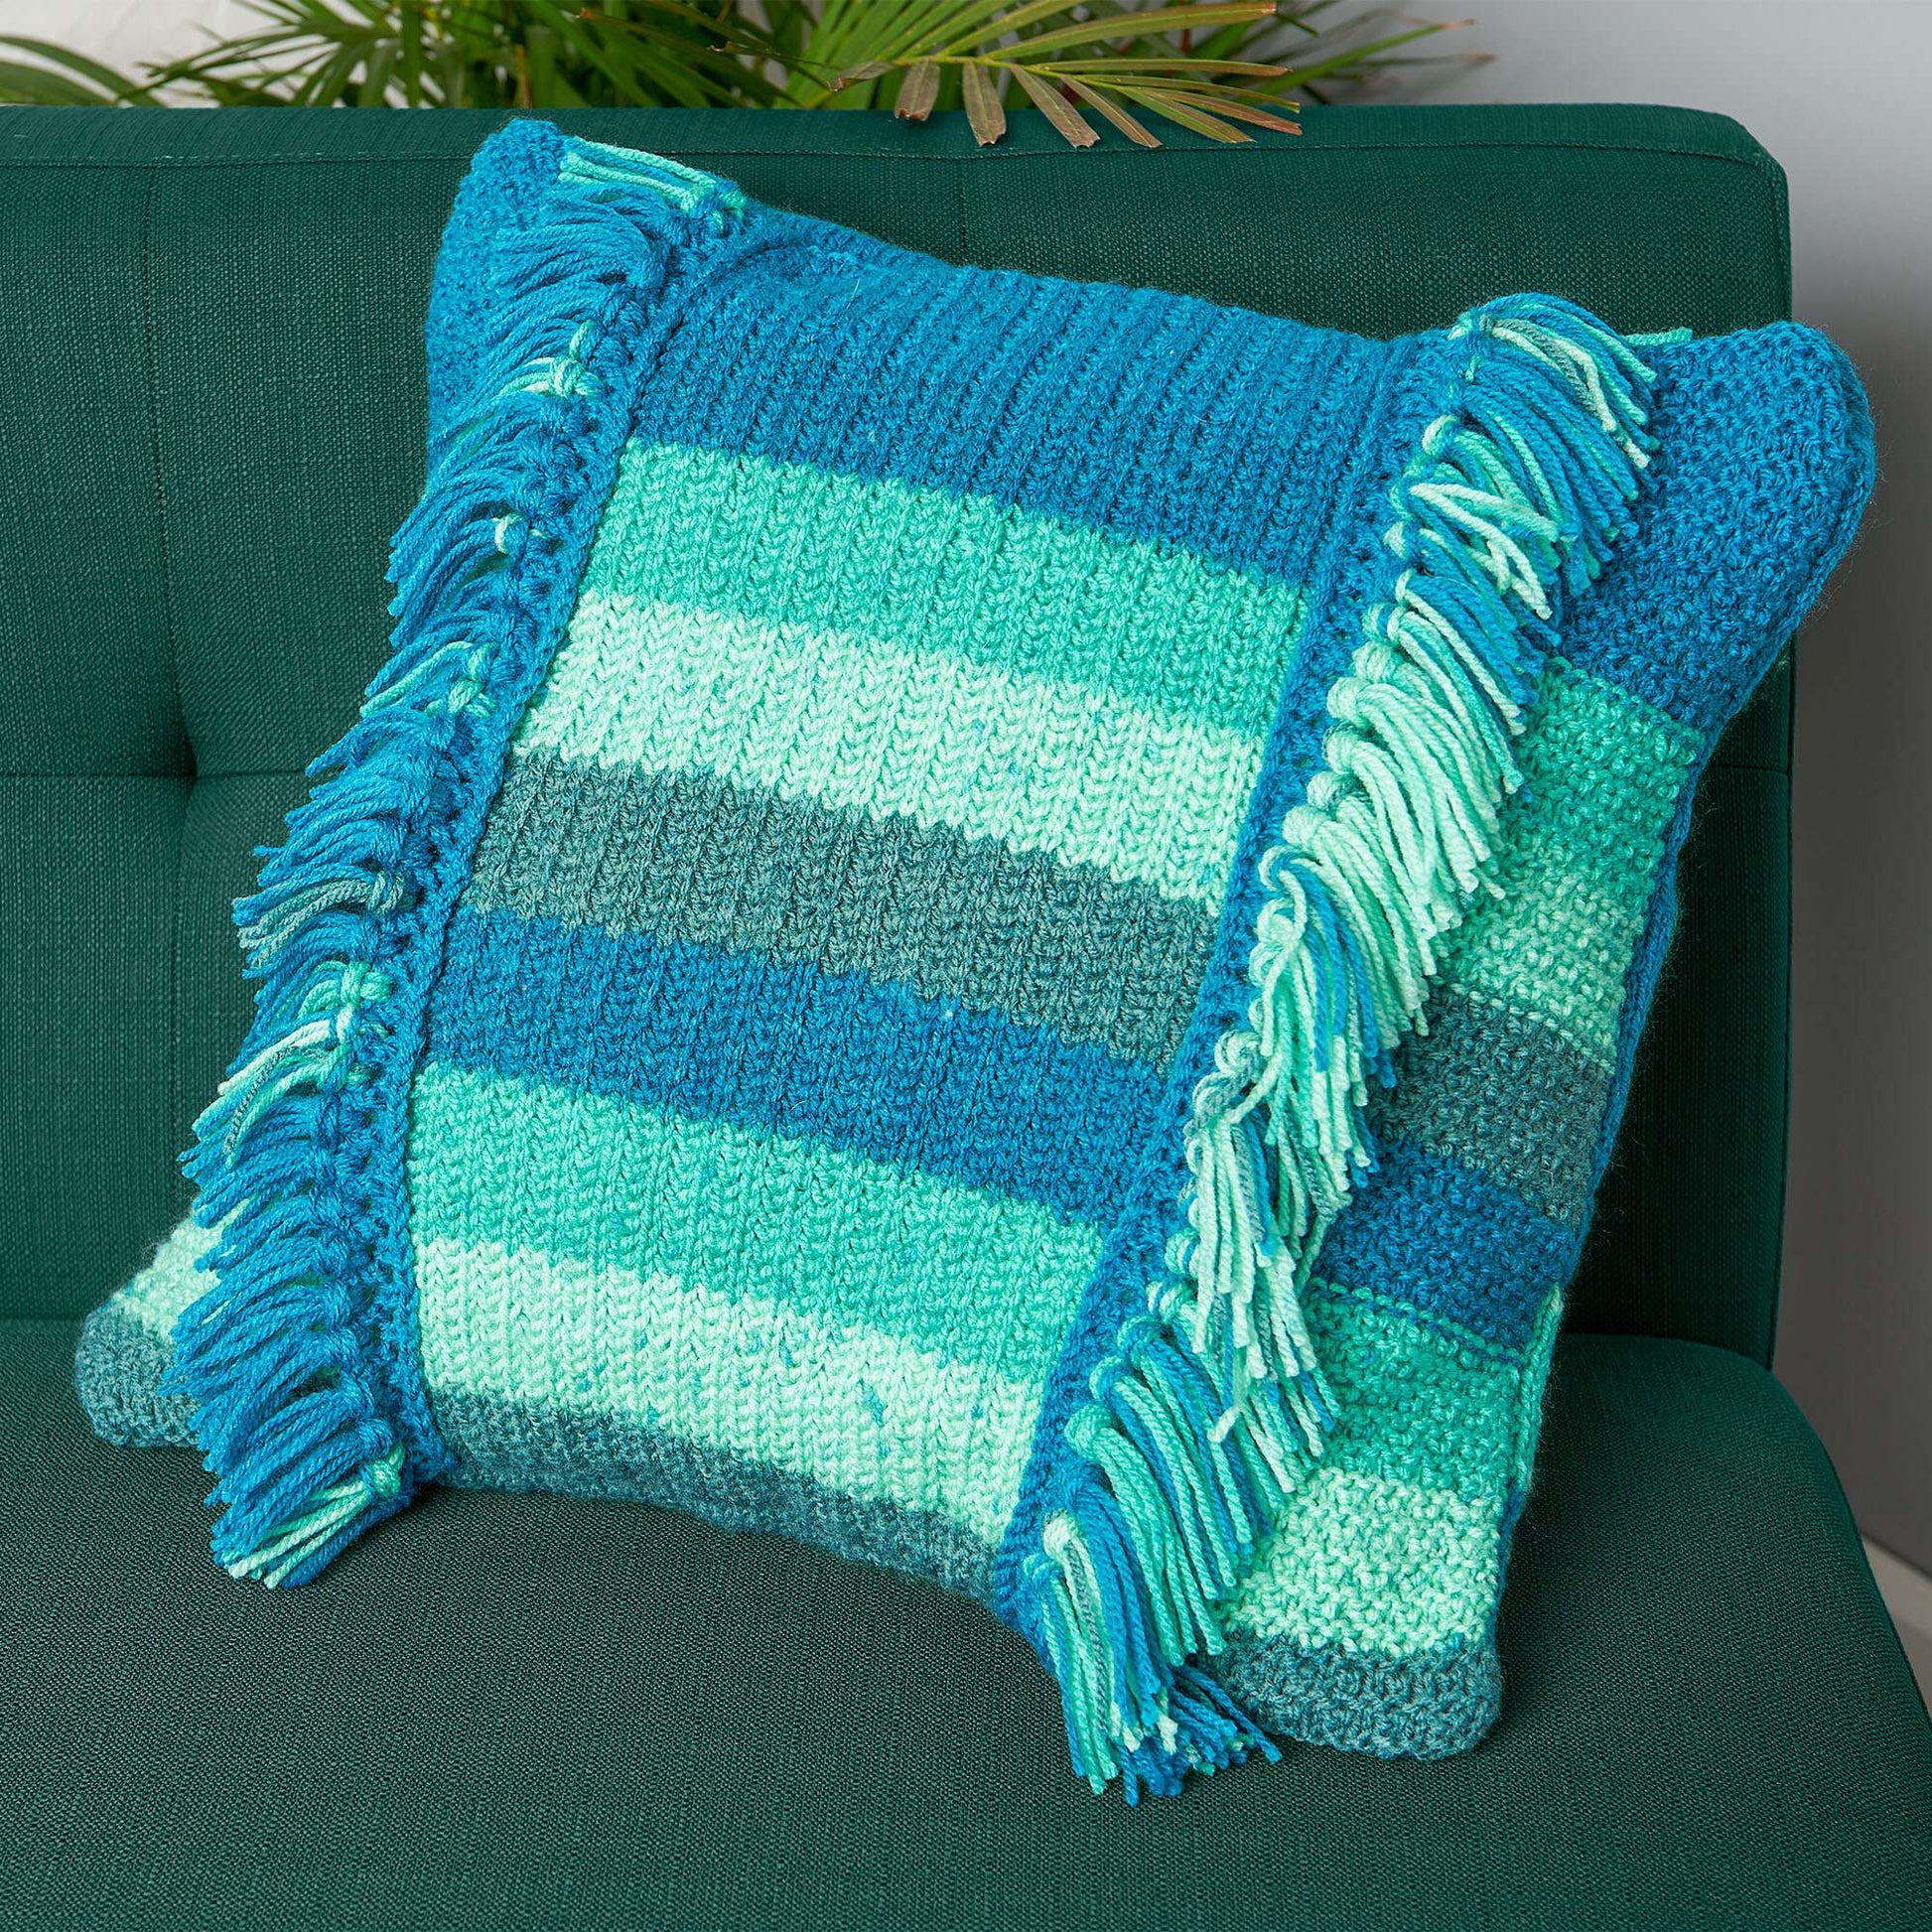 Free Caron Tasseled Fringe Knit Pillow Pattern